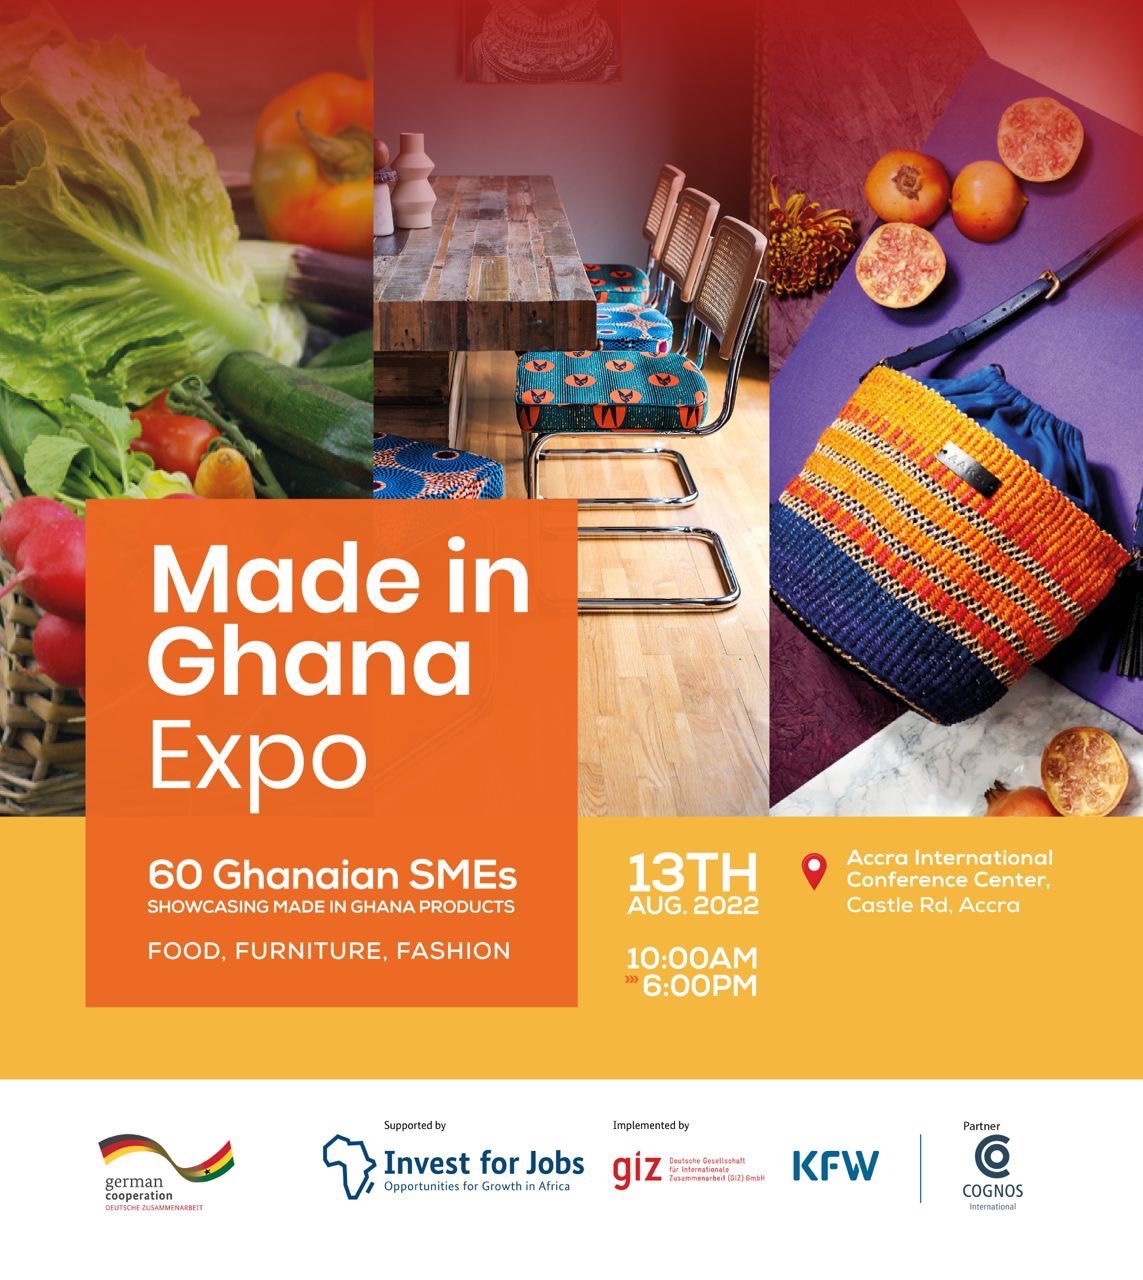 GIZ GHANA SET TO ORGANIZE MADE IN GHANA EXPO ON AUGUST 13.